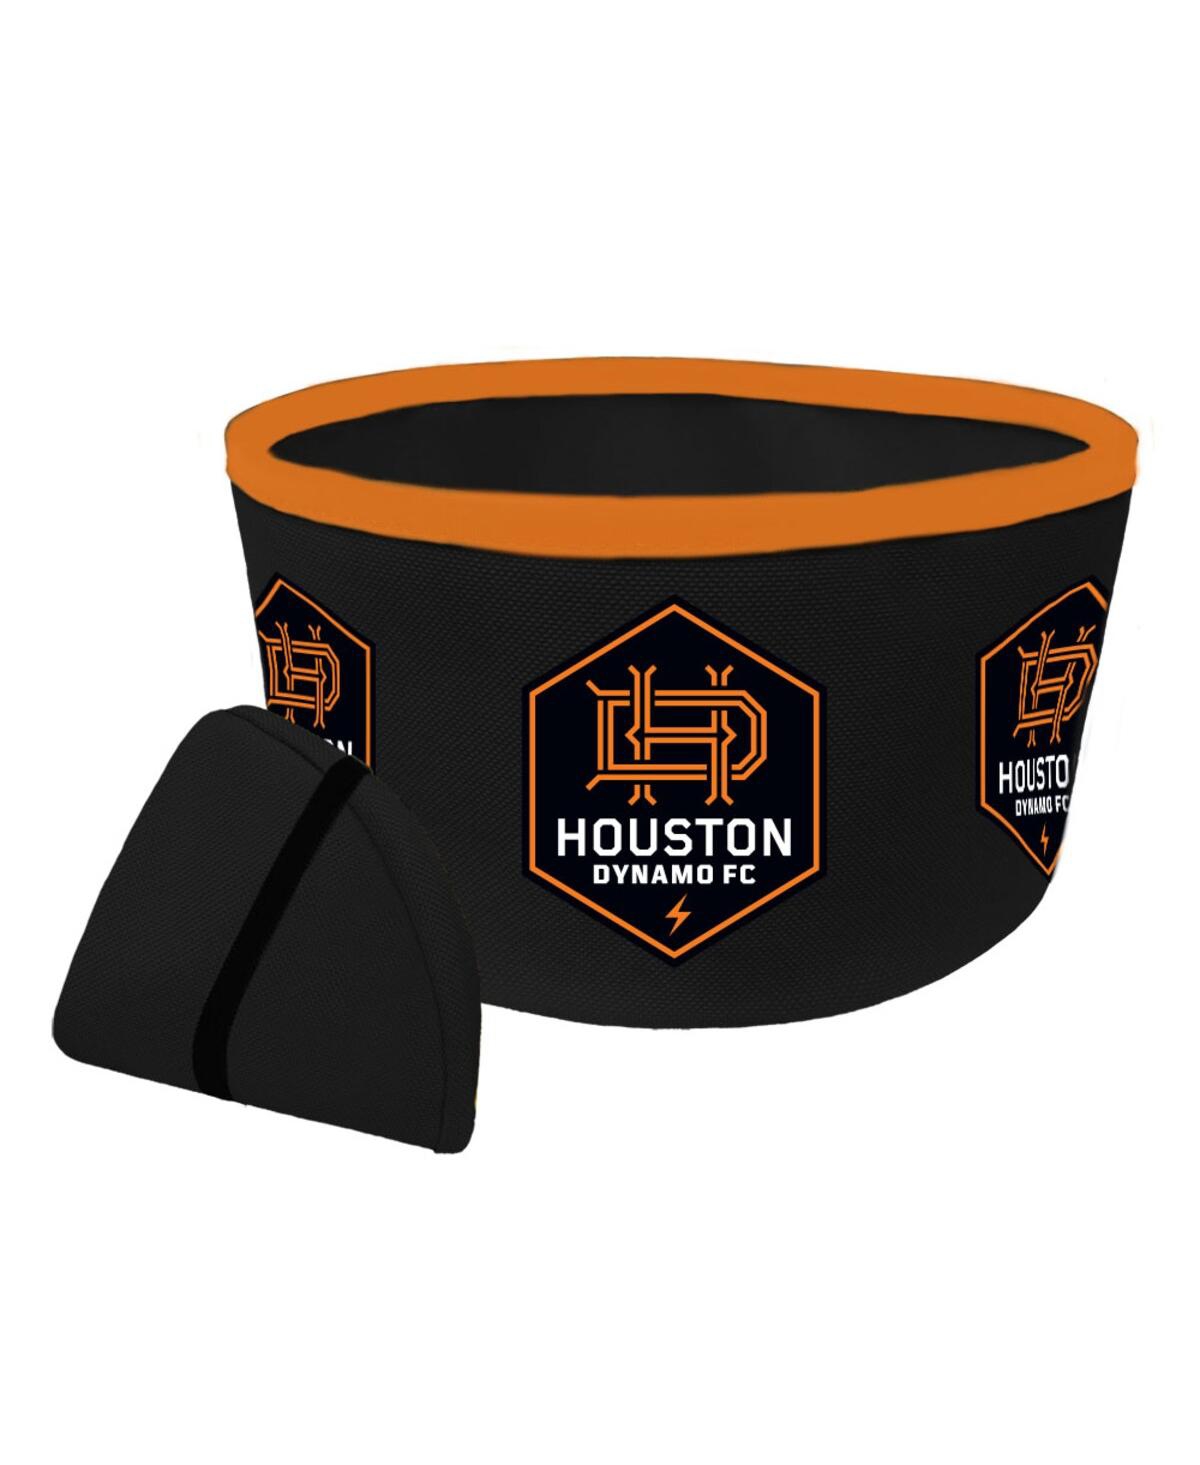 Houston Dynamo Fc Collapsible Travel Dog Bowl - Orange